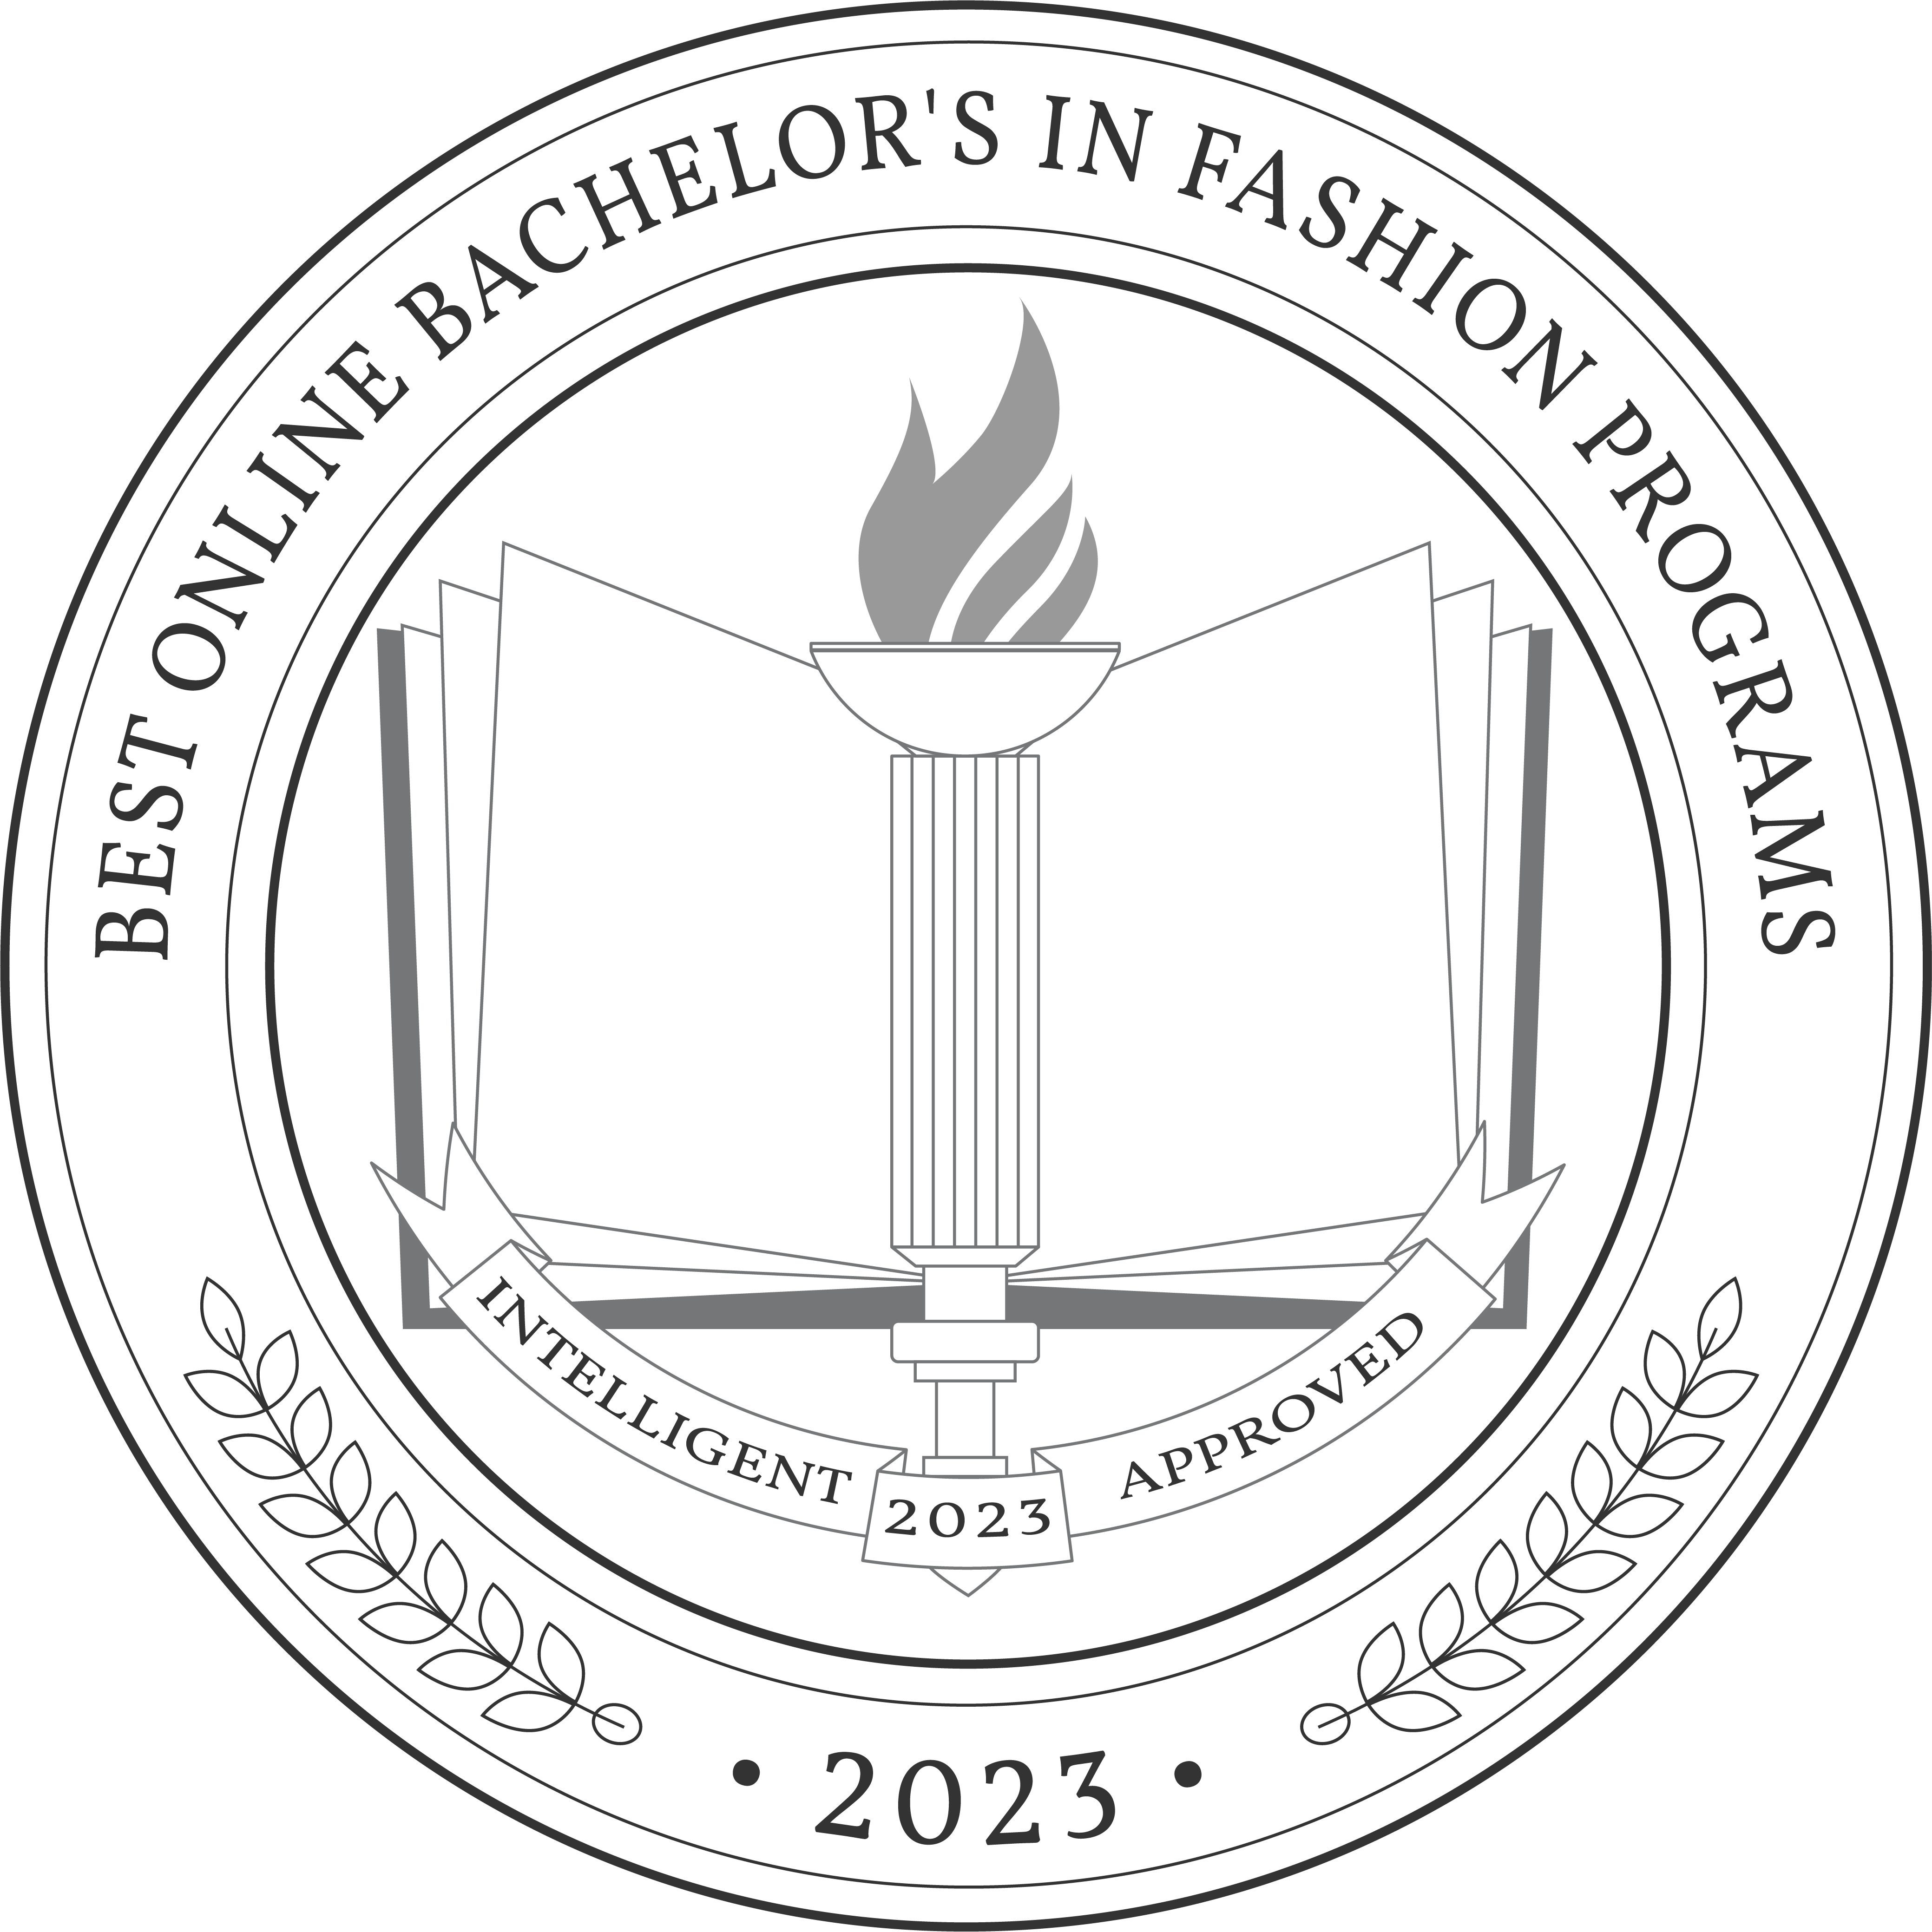 Best Online Bachelor's in Fashion Programs Badge